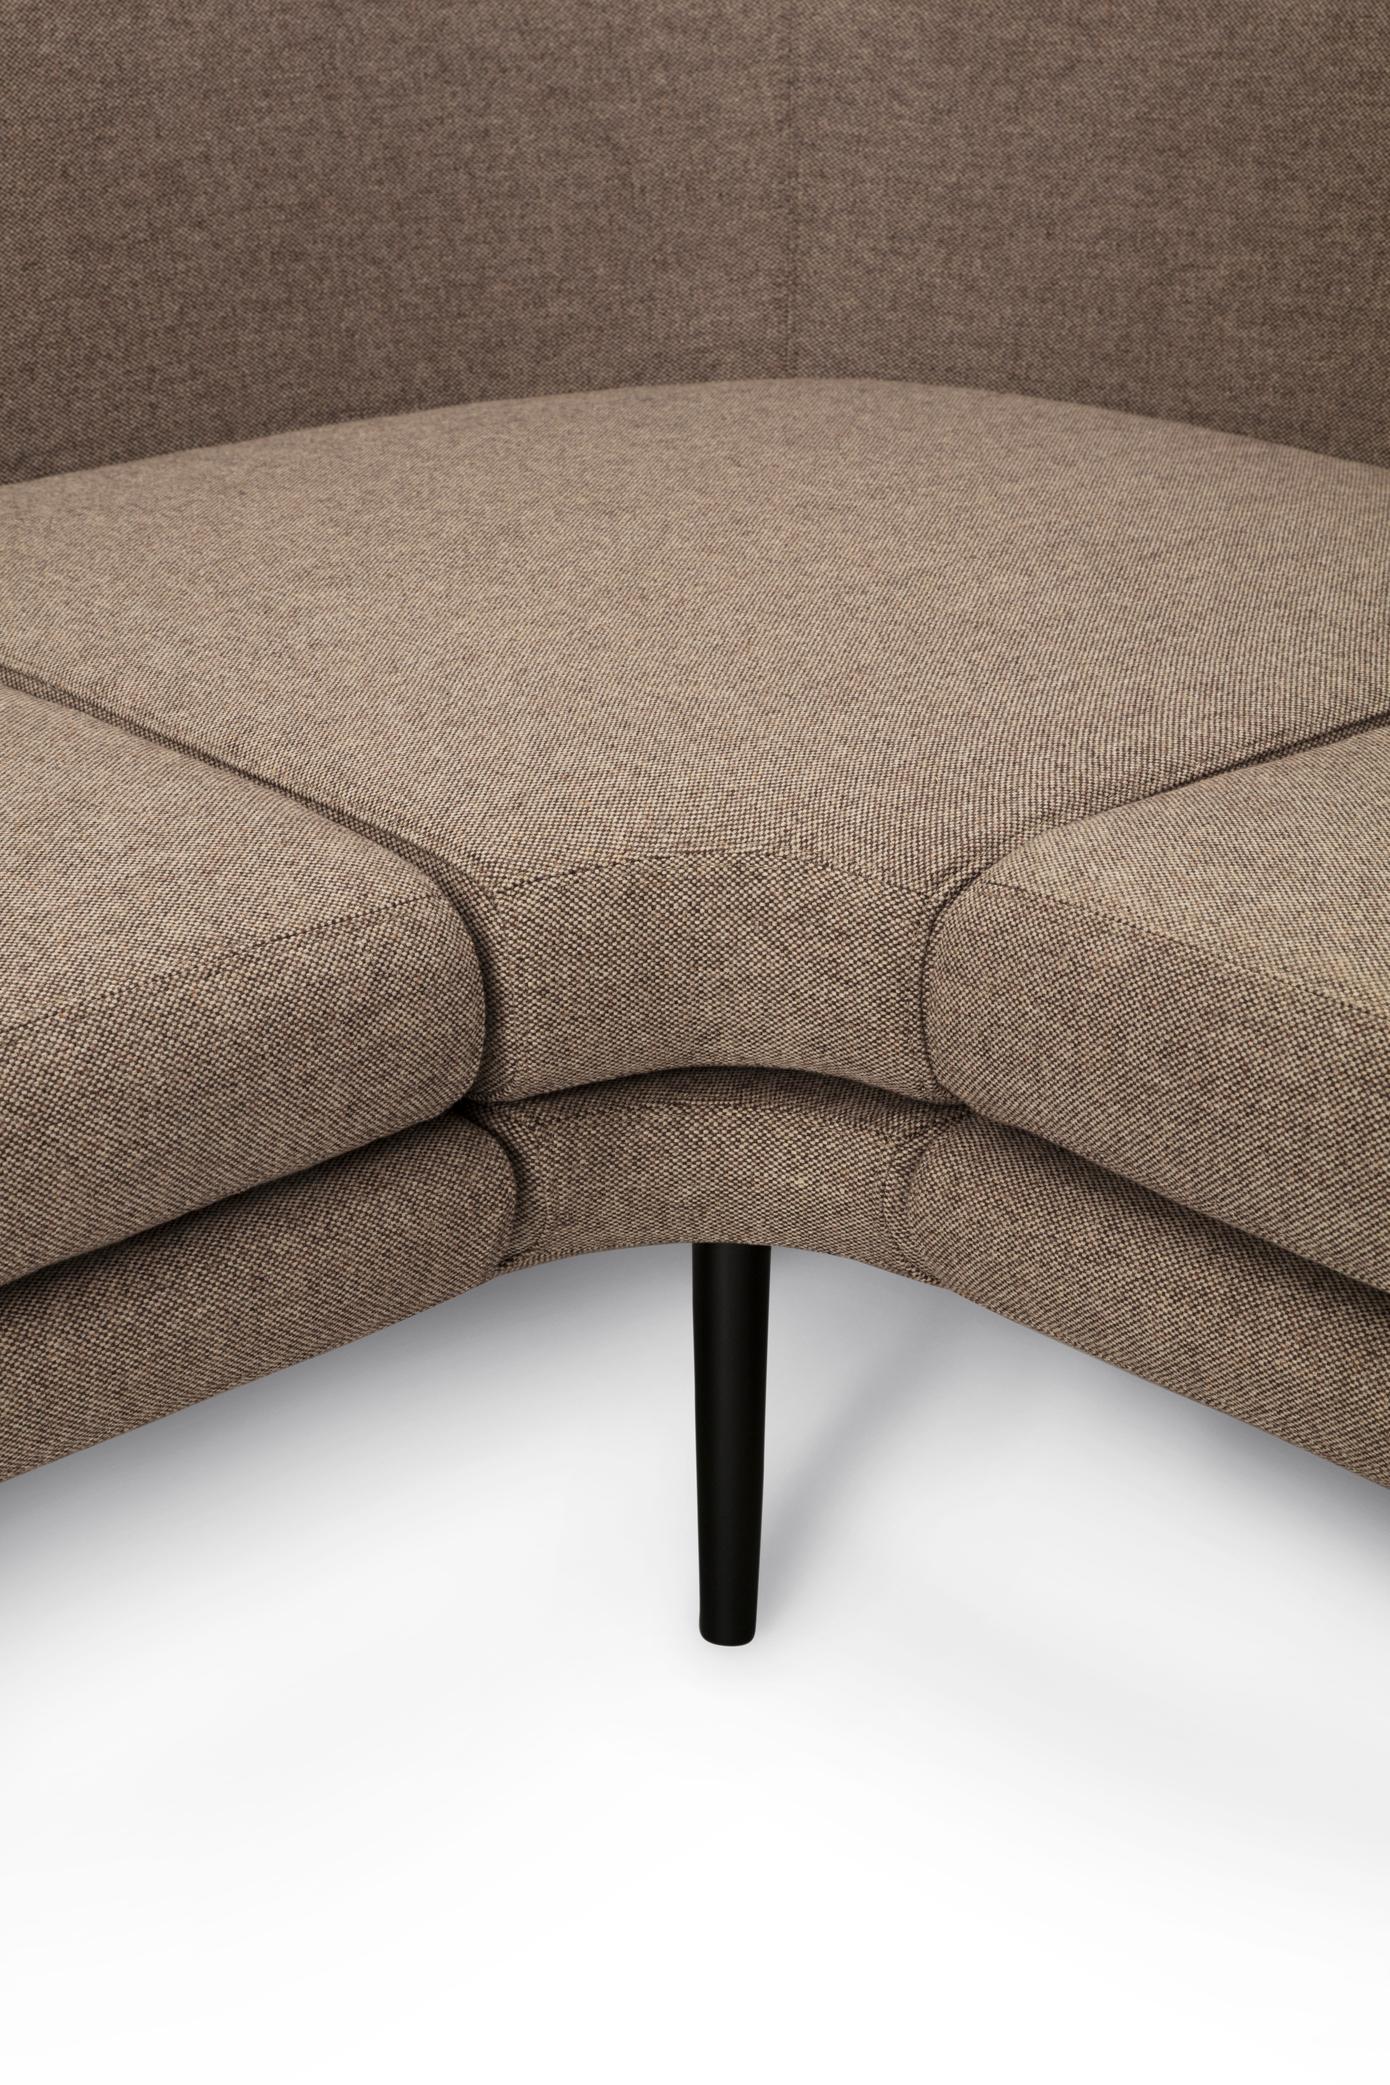 Customizable Normann Copenhagen Sum Modular Sofa 4 Seater by Simon Legald For Sale 4